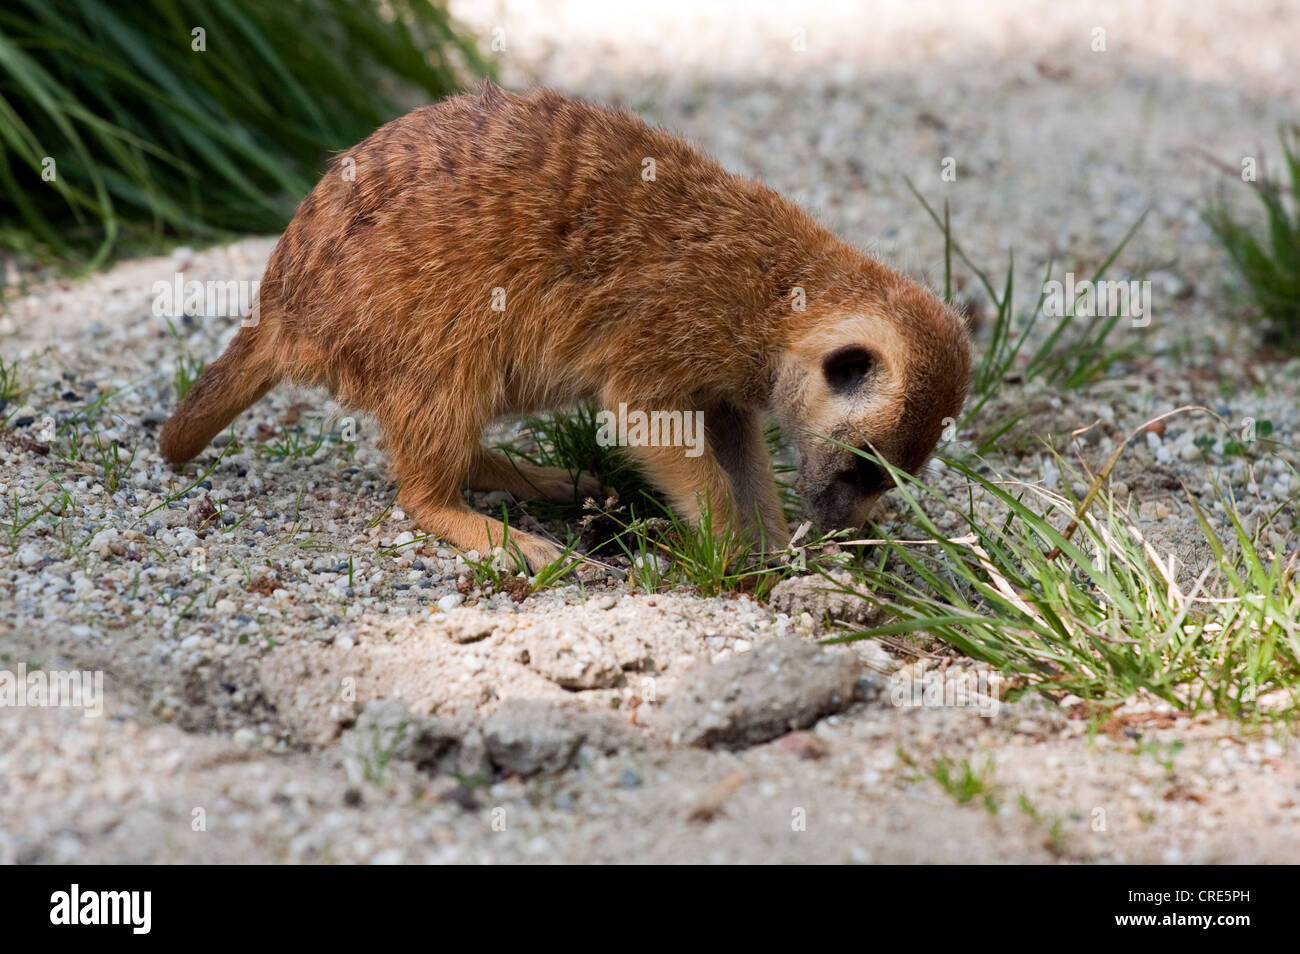 Meerkat digging in the ground. Stock Photo